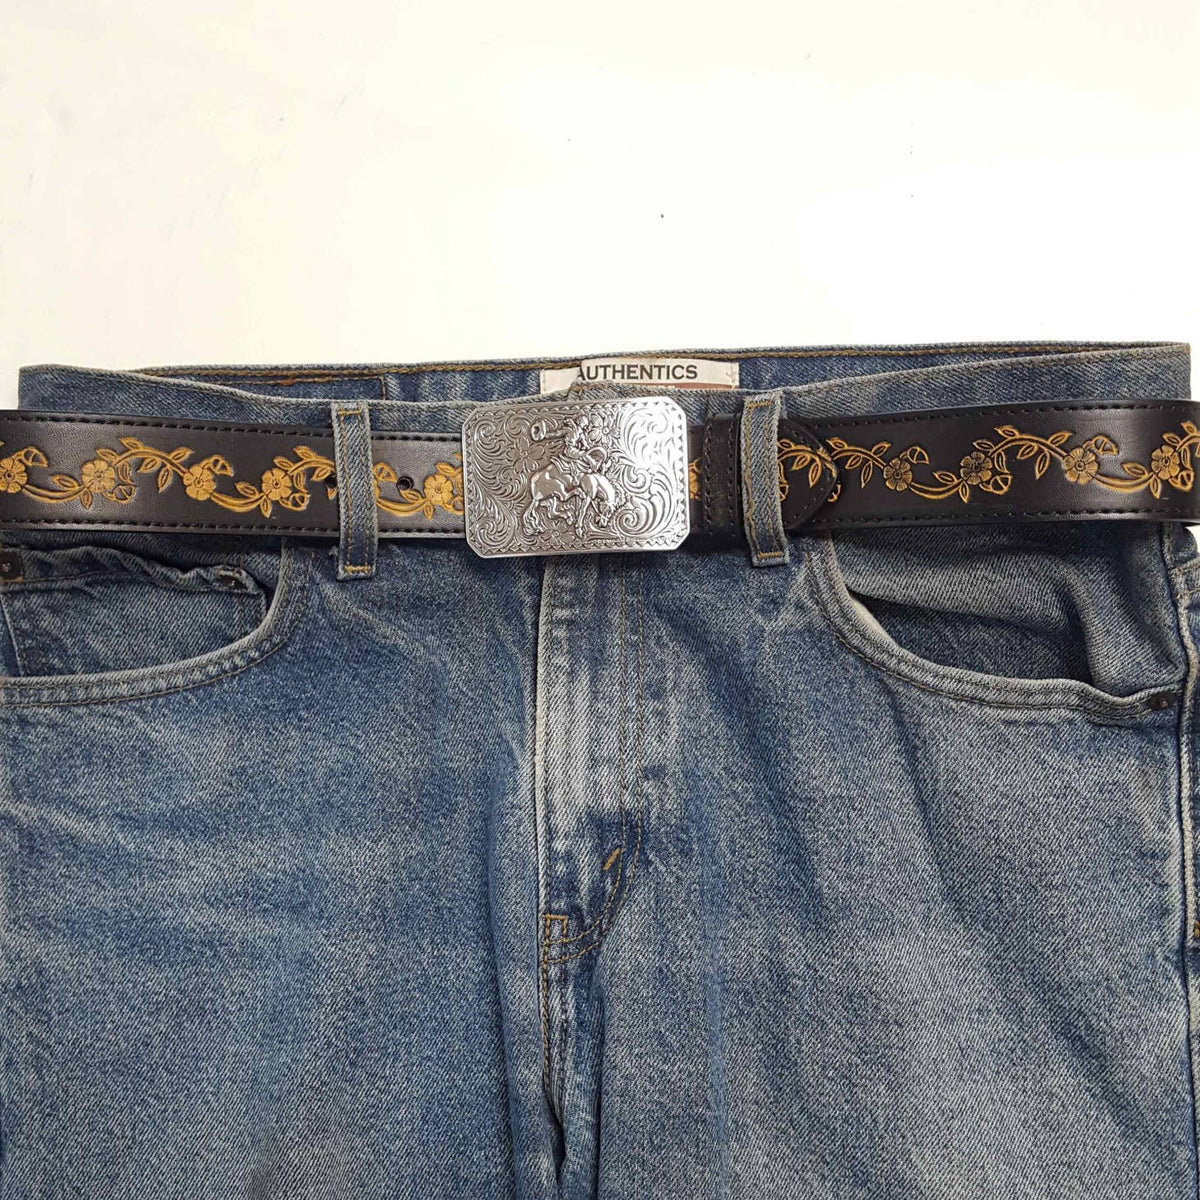 Rodeo Buckle on Vintage Floral Tooled Leather Belt